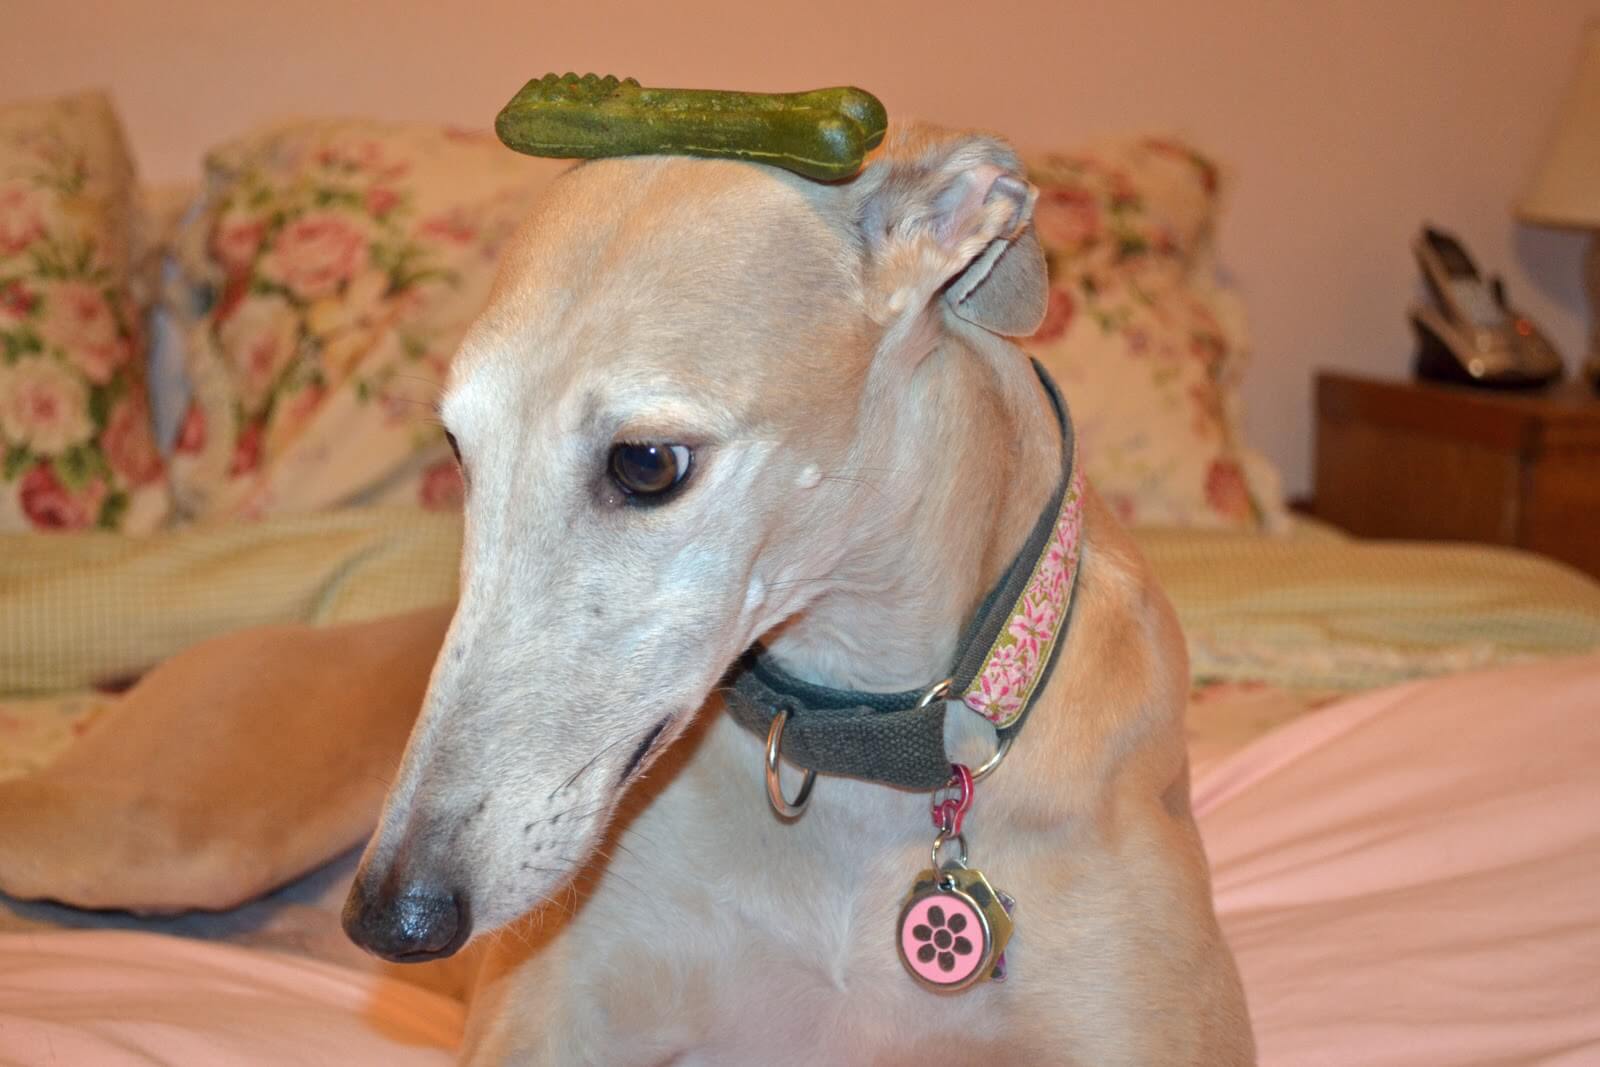 Greenies on top of dog's head